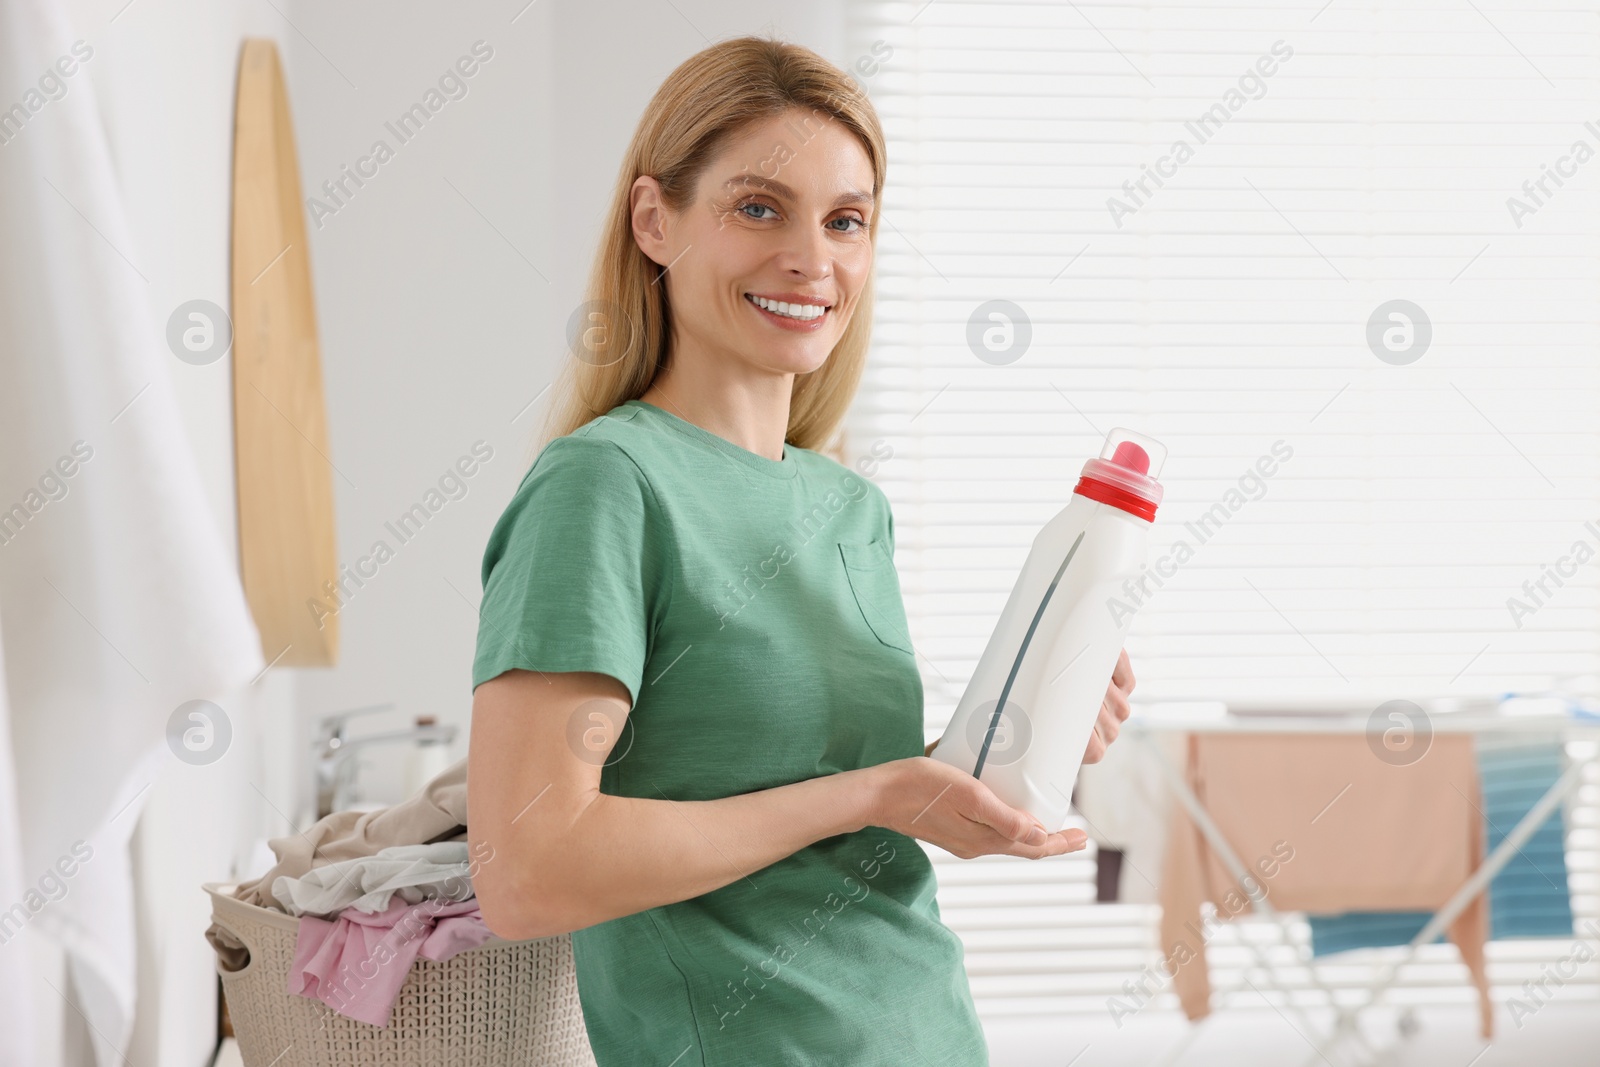 Photo of Beautiful woman holding fabric softener in bathroom